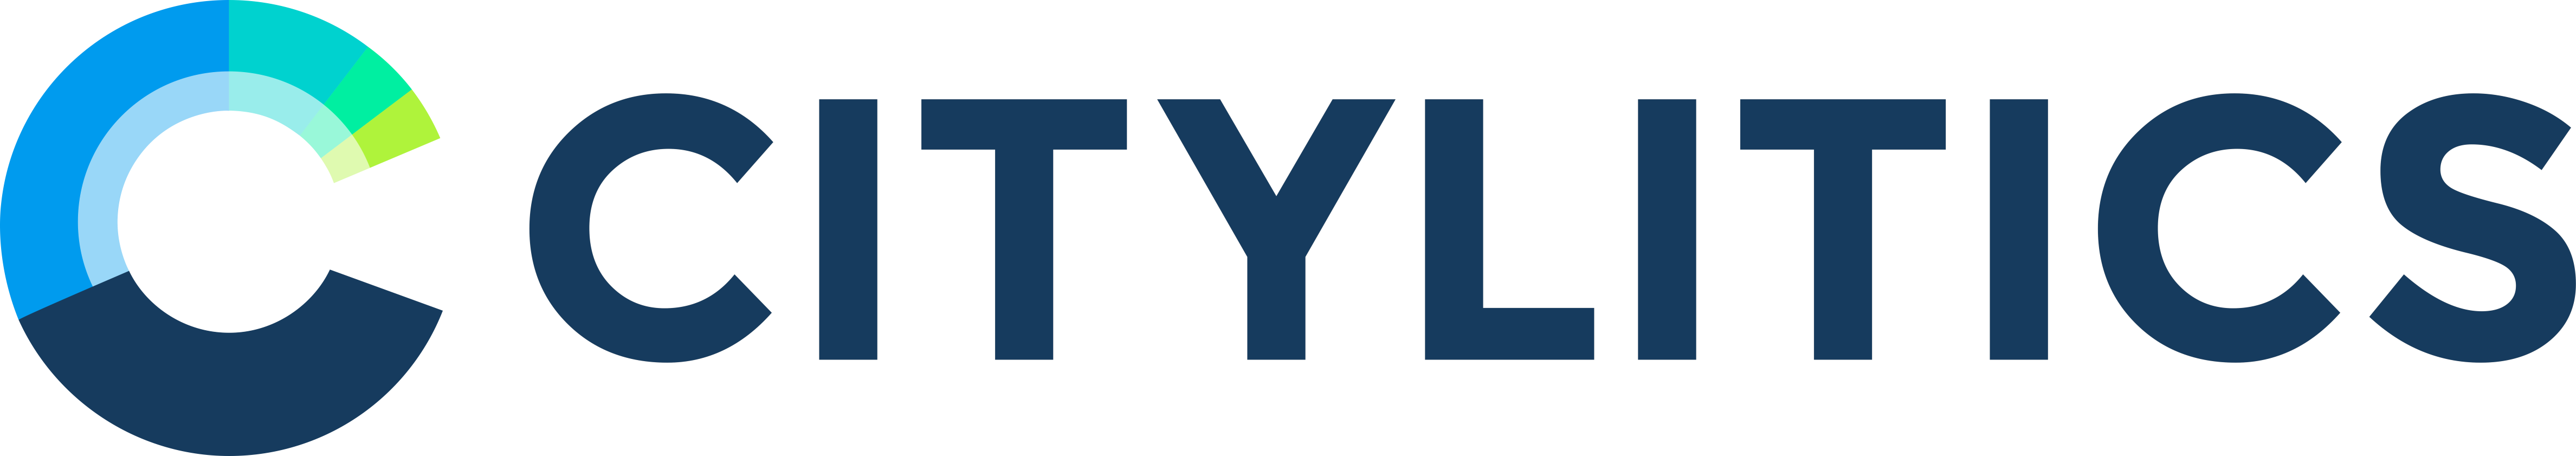 citylitics-logo-dark-website